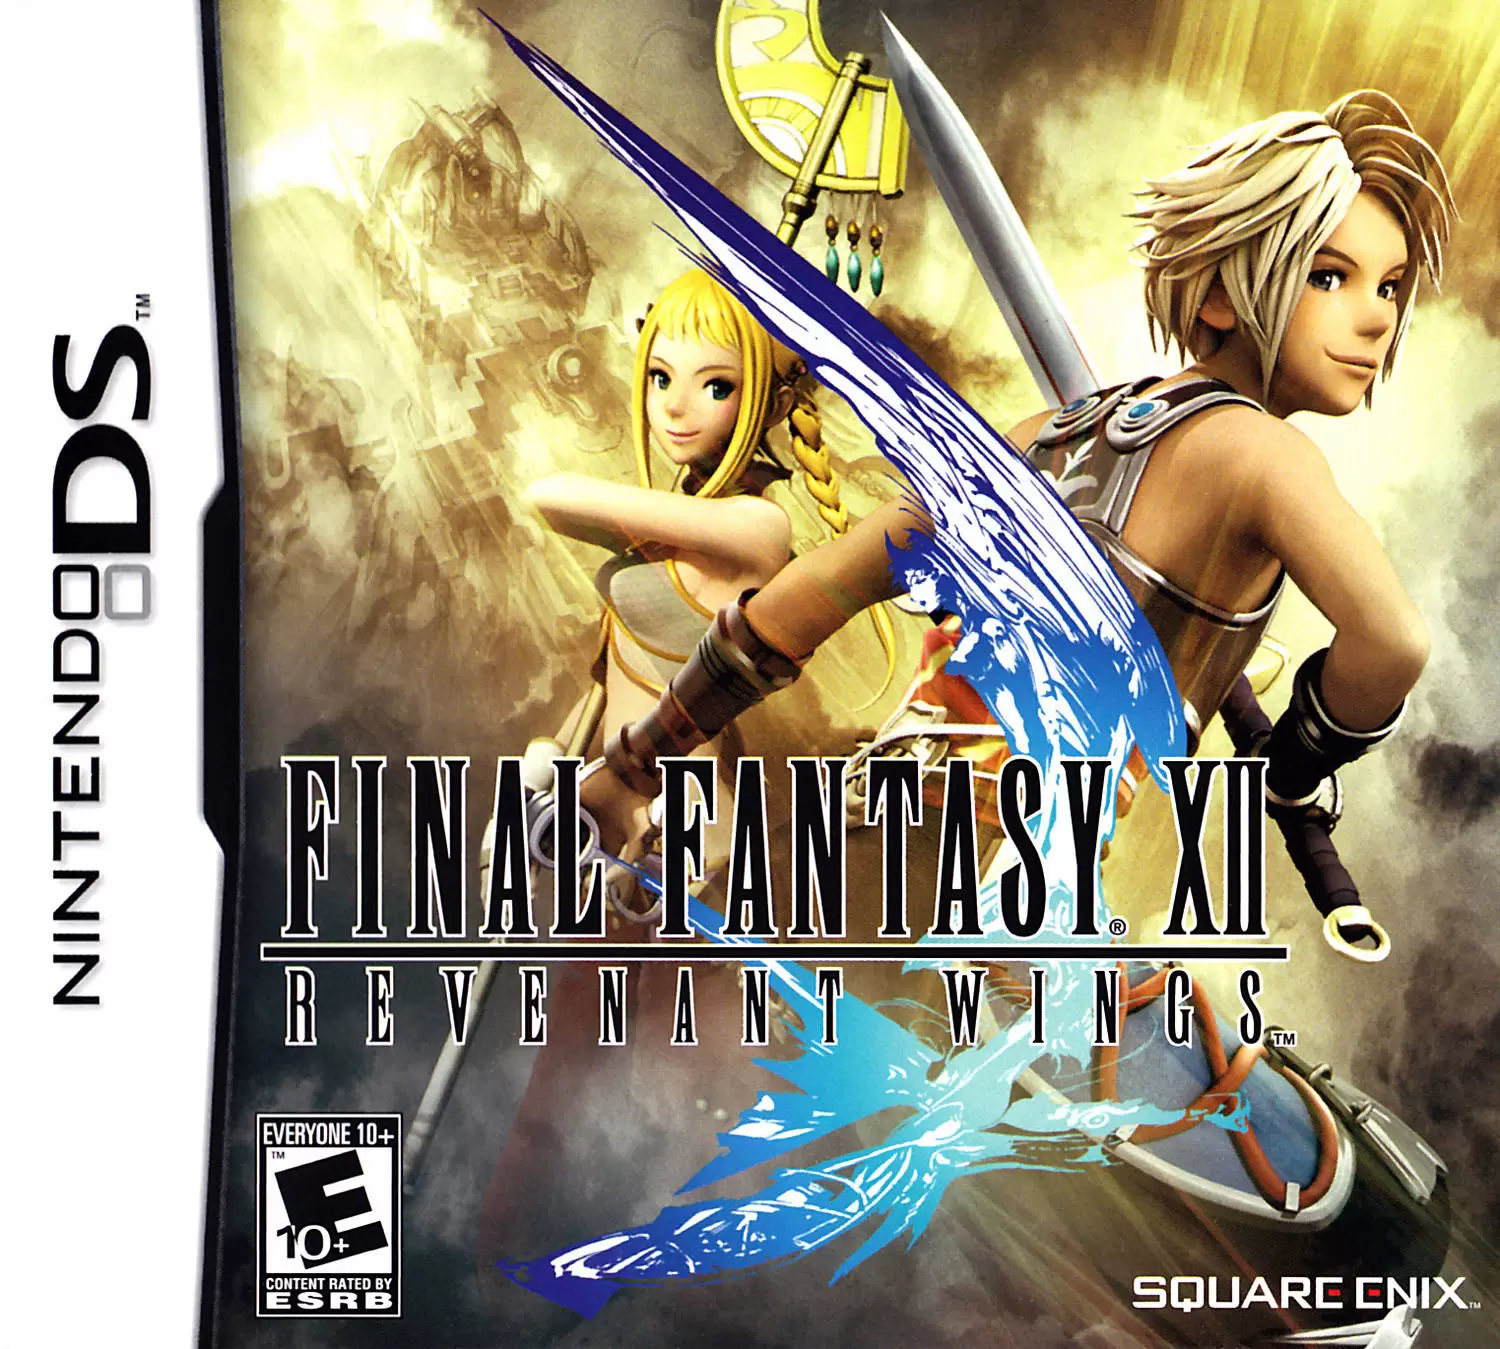 Nintendo DS Games - Final Fantasy XII: Revenant Wings